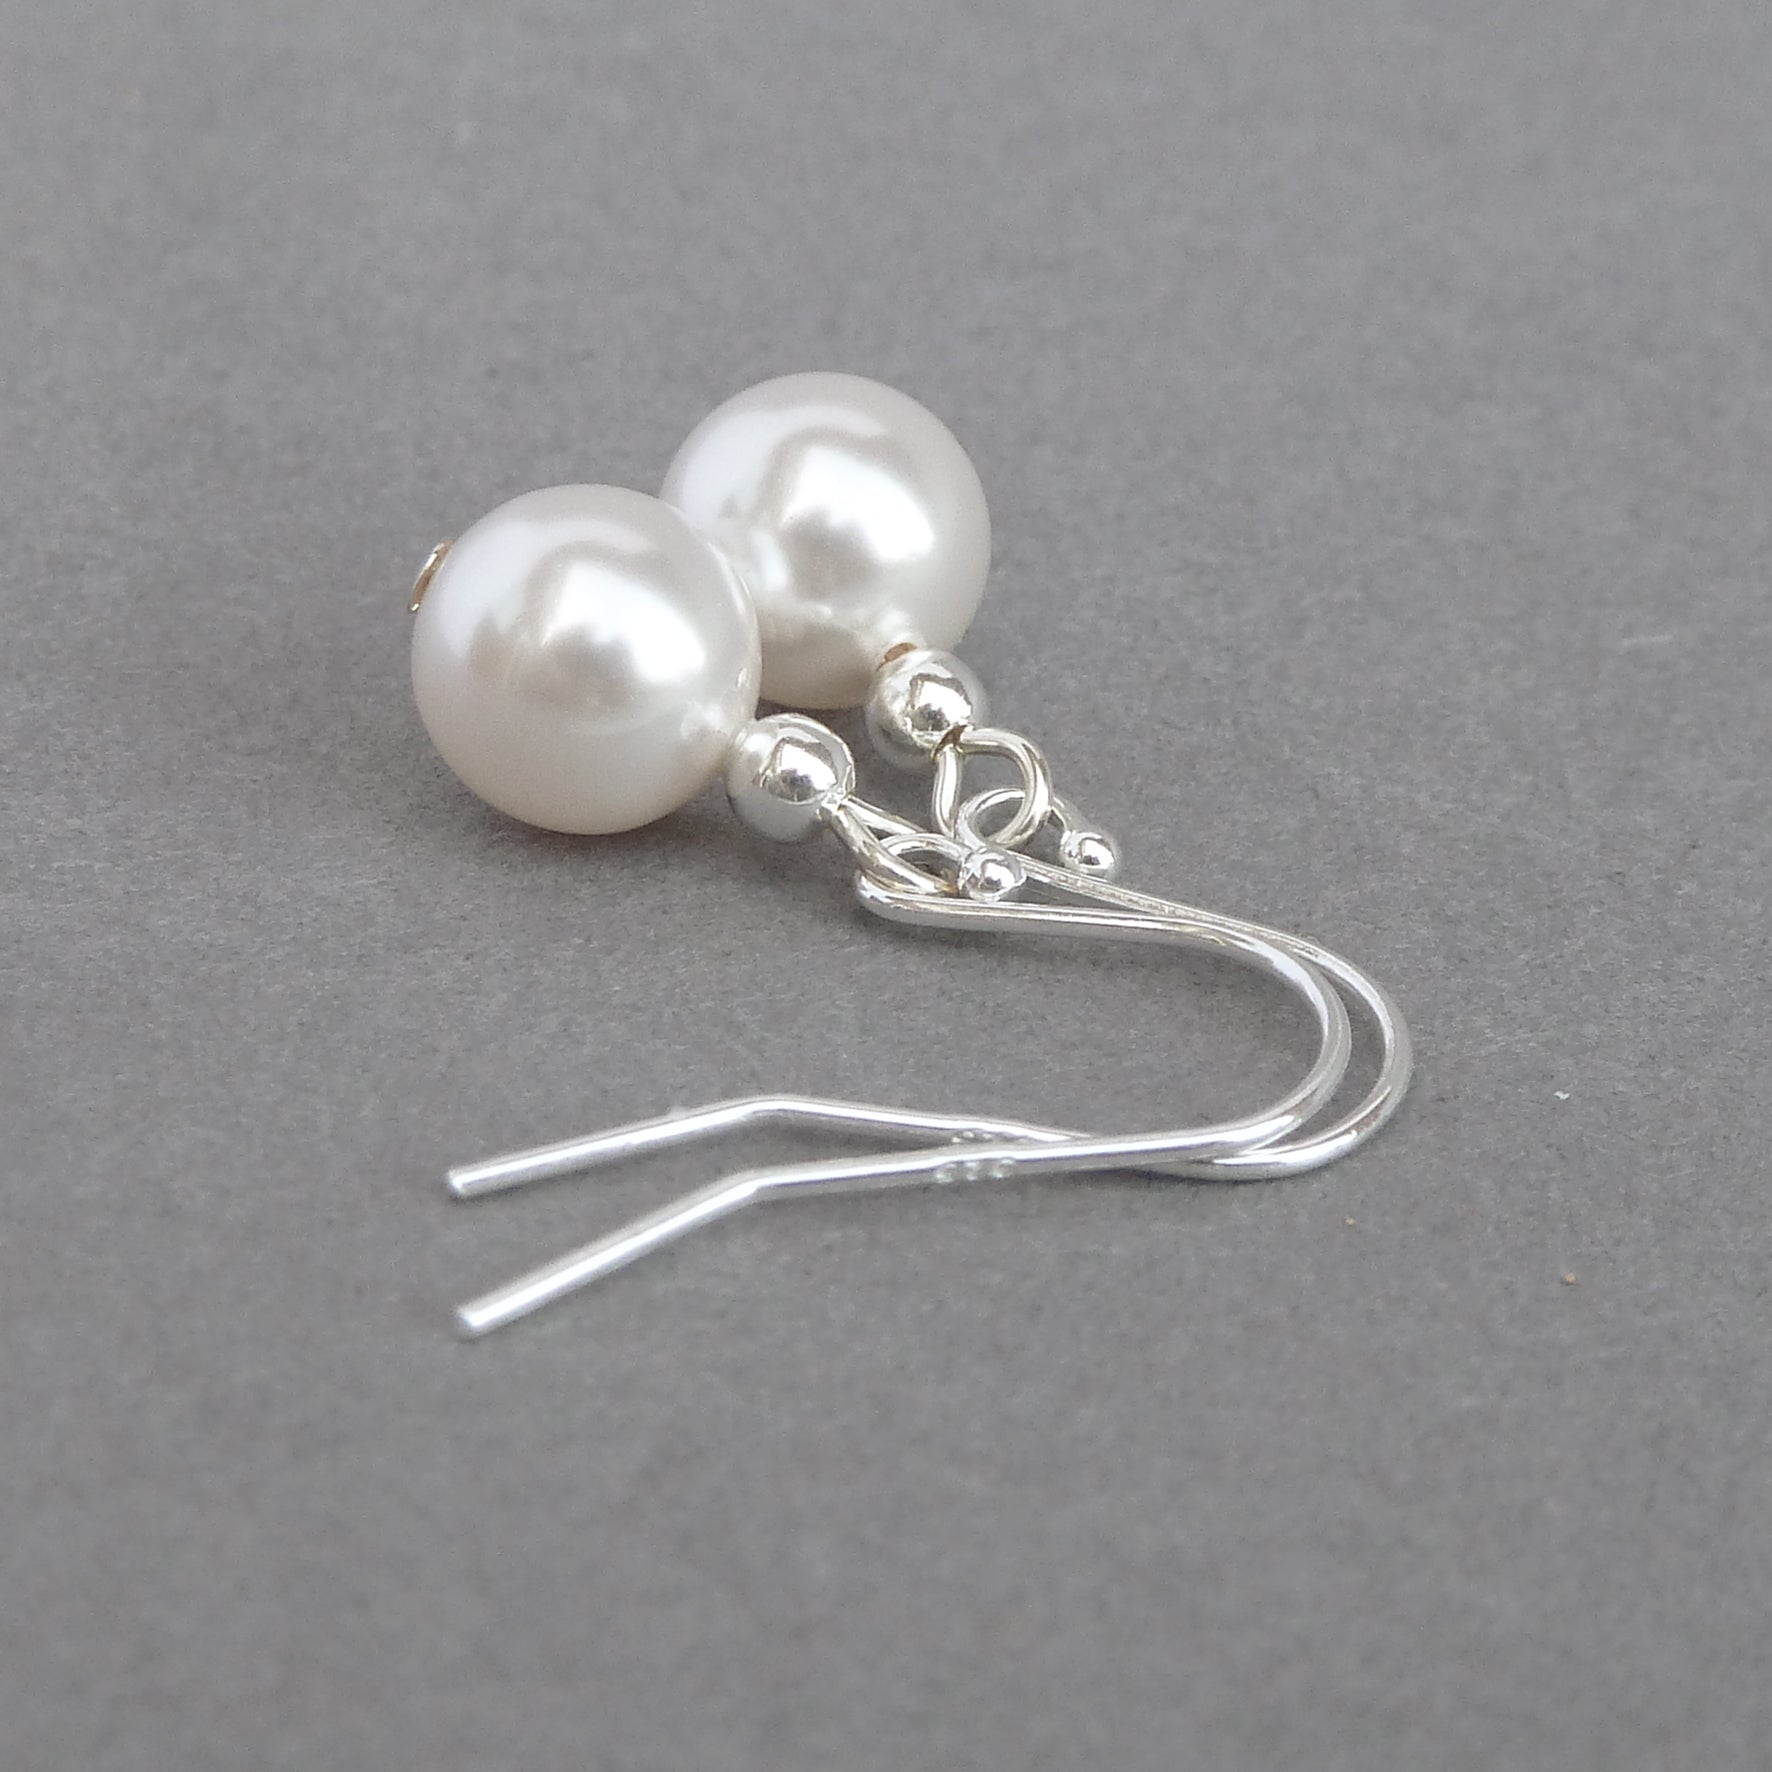 White pearl drop bridesmaids earrings